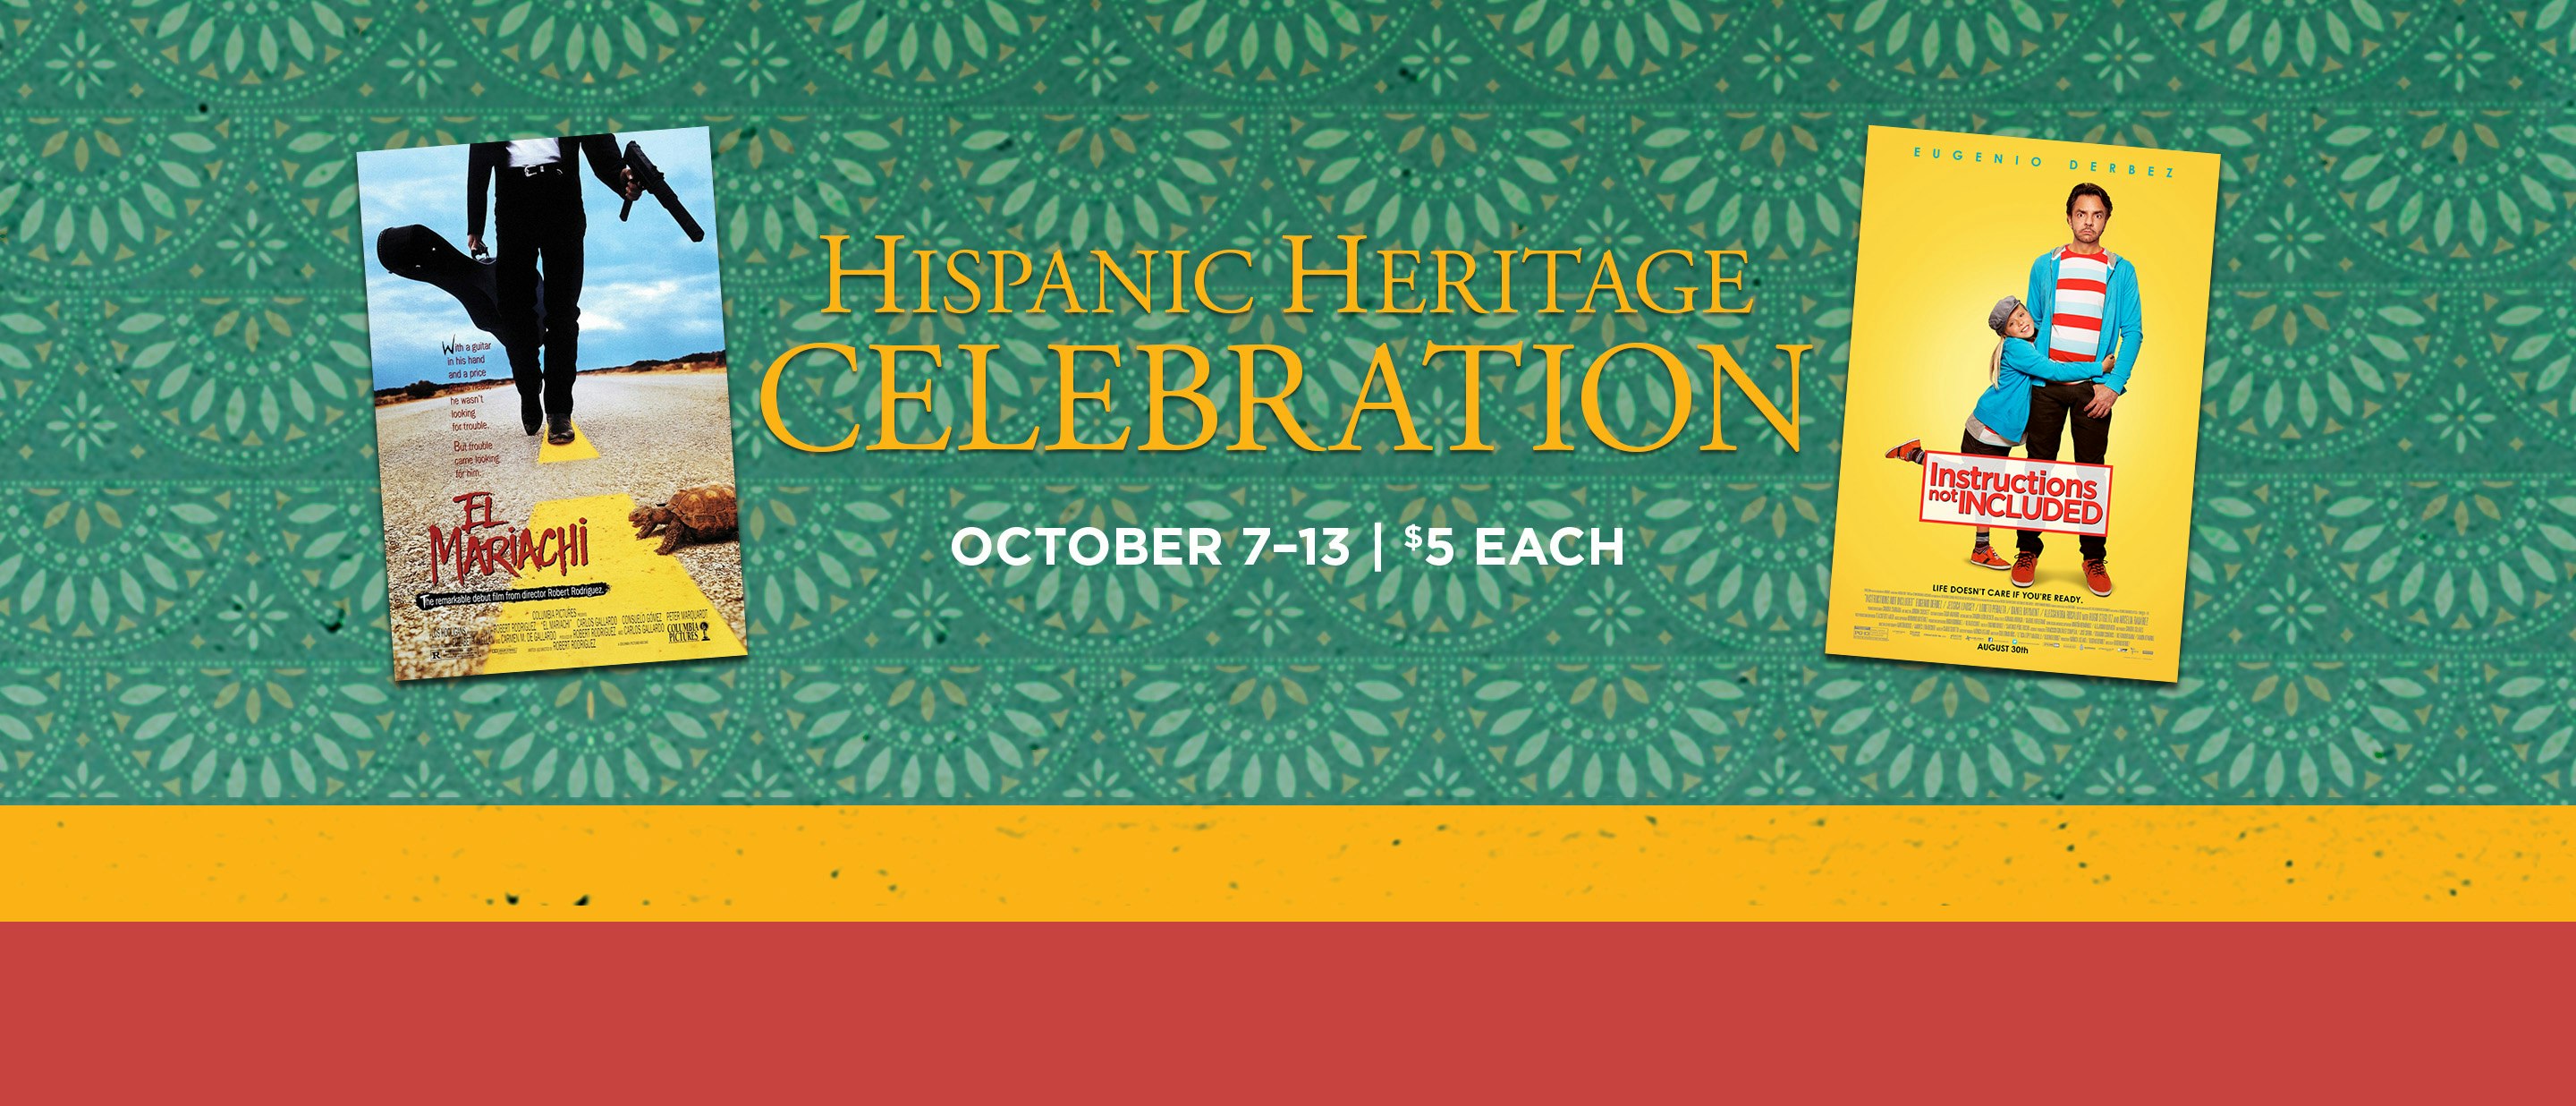 Hispanic Heritage Celebration Series